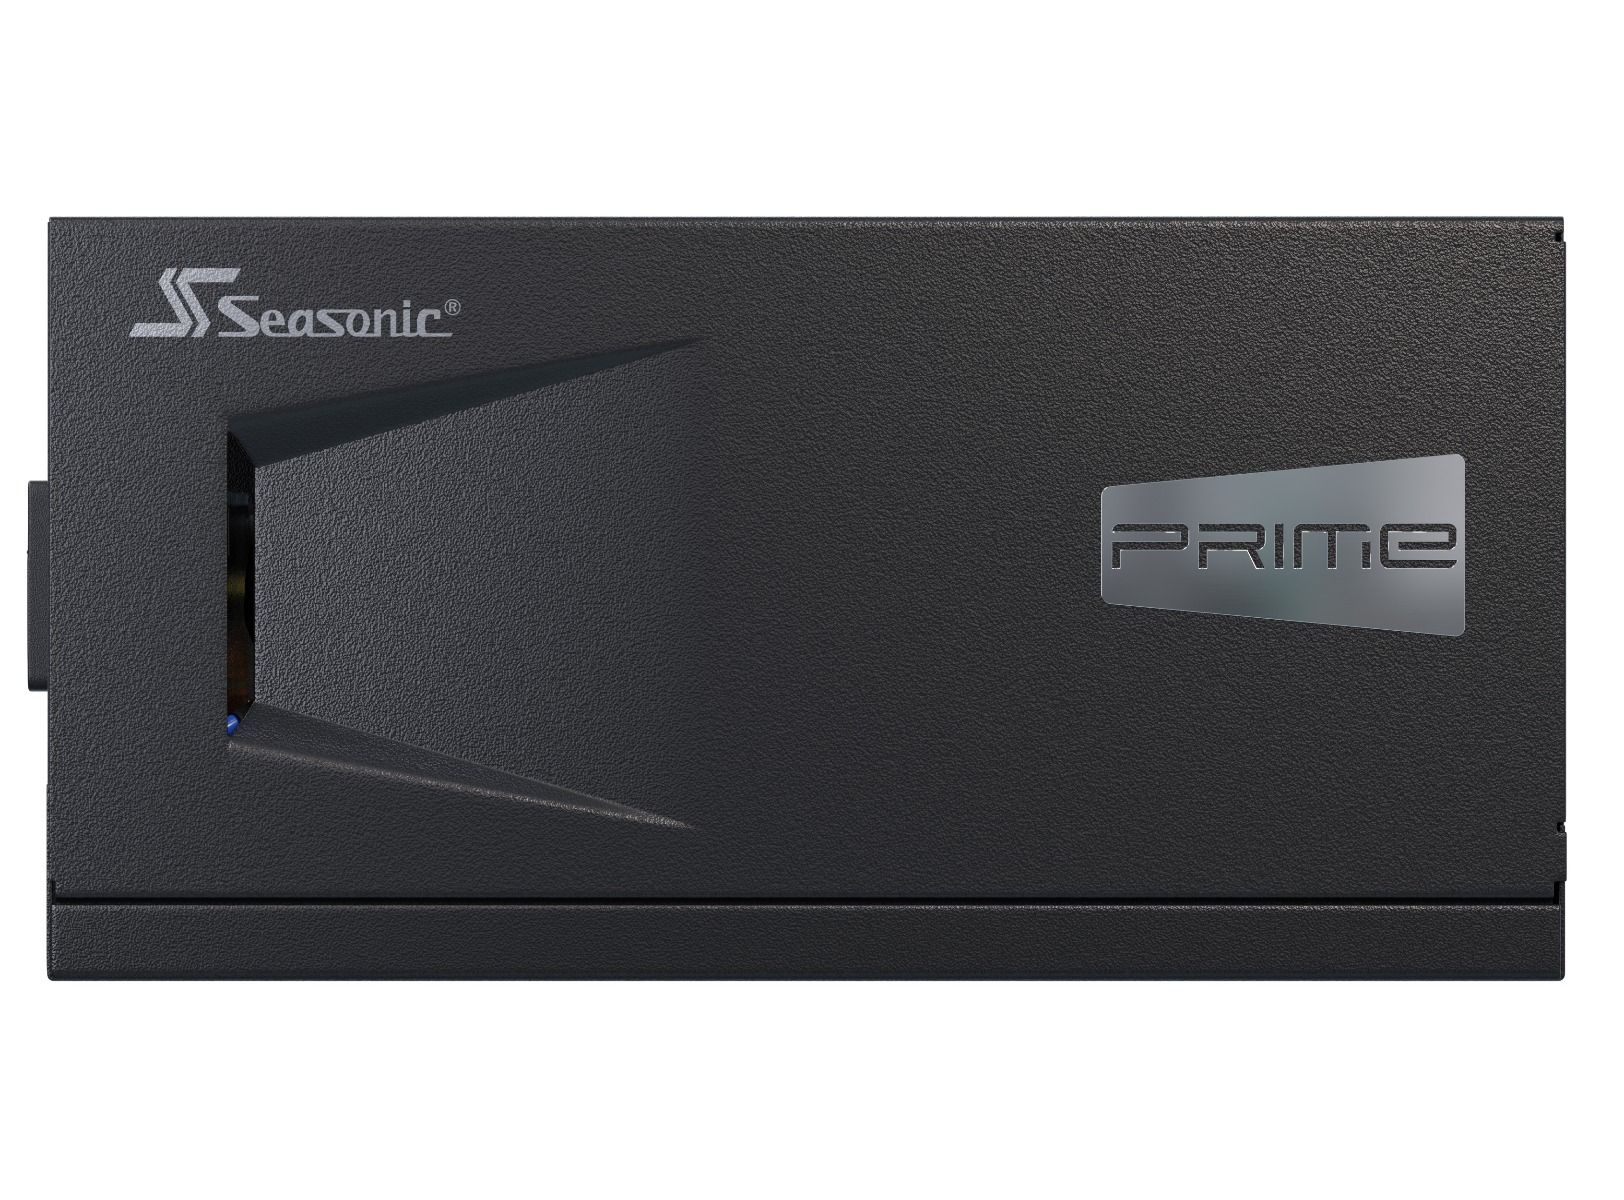 Seasonic - Seasonic Prime PX-1300 1300W 80 Plus Platinum Modular Power Supply